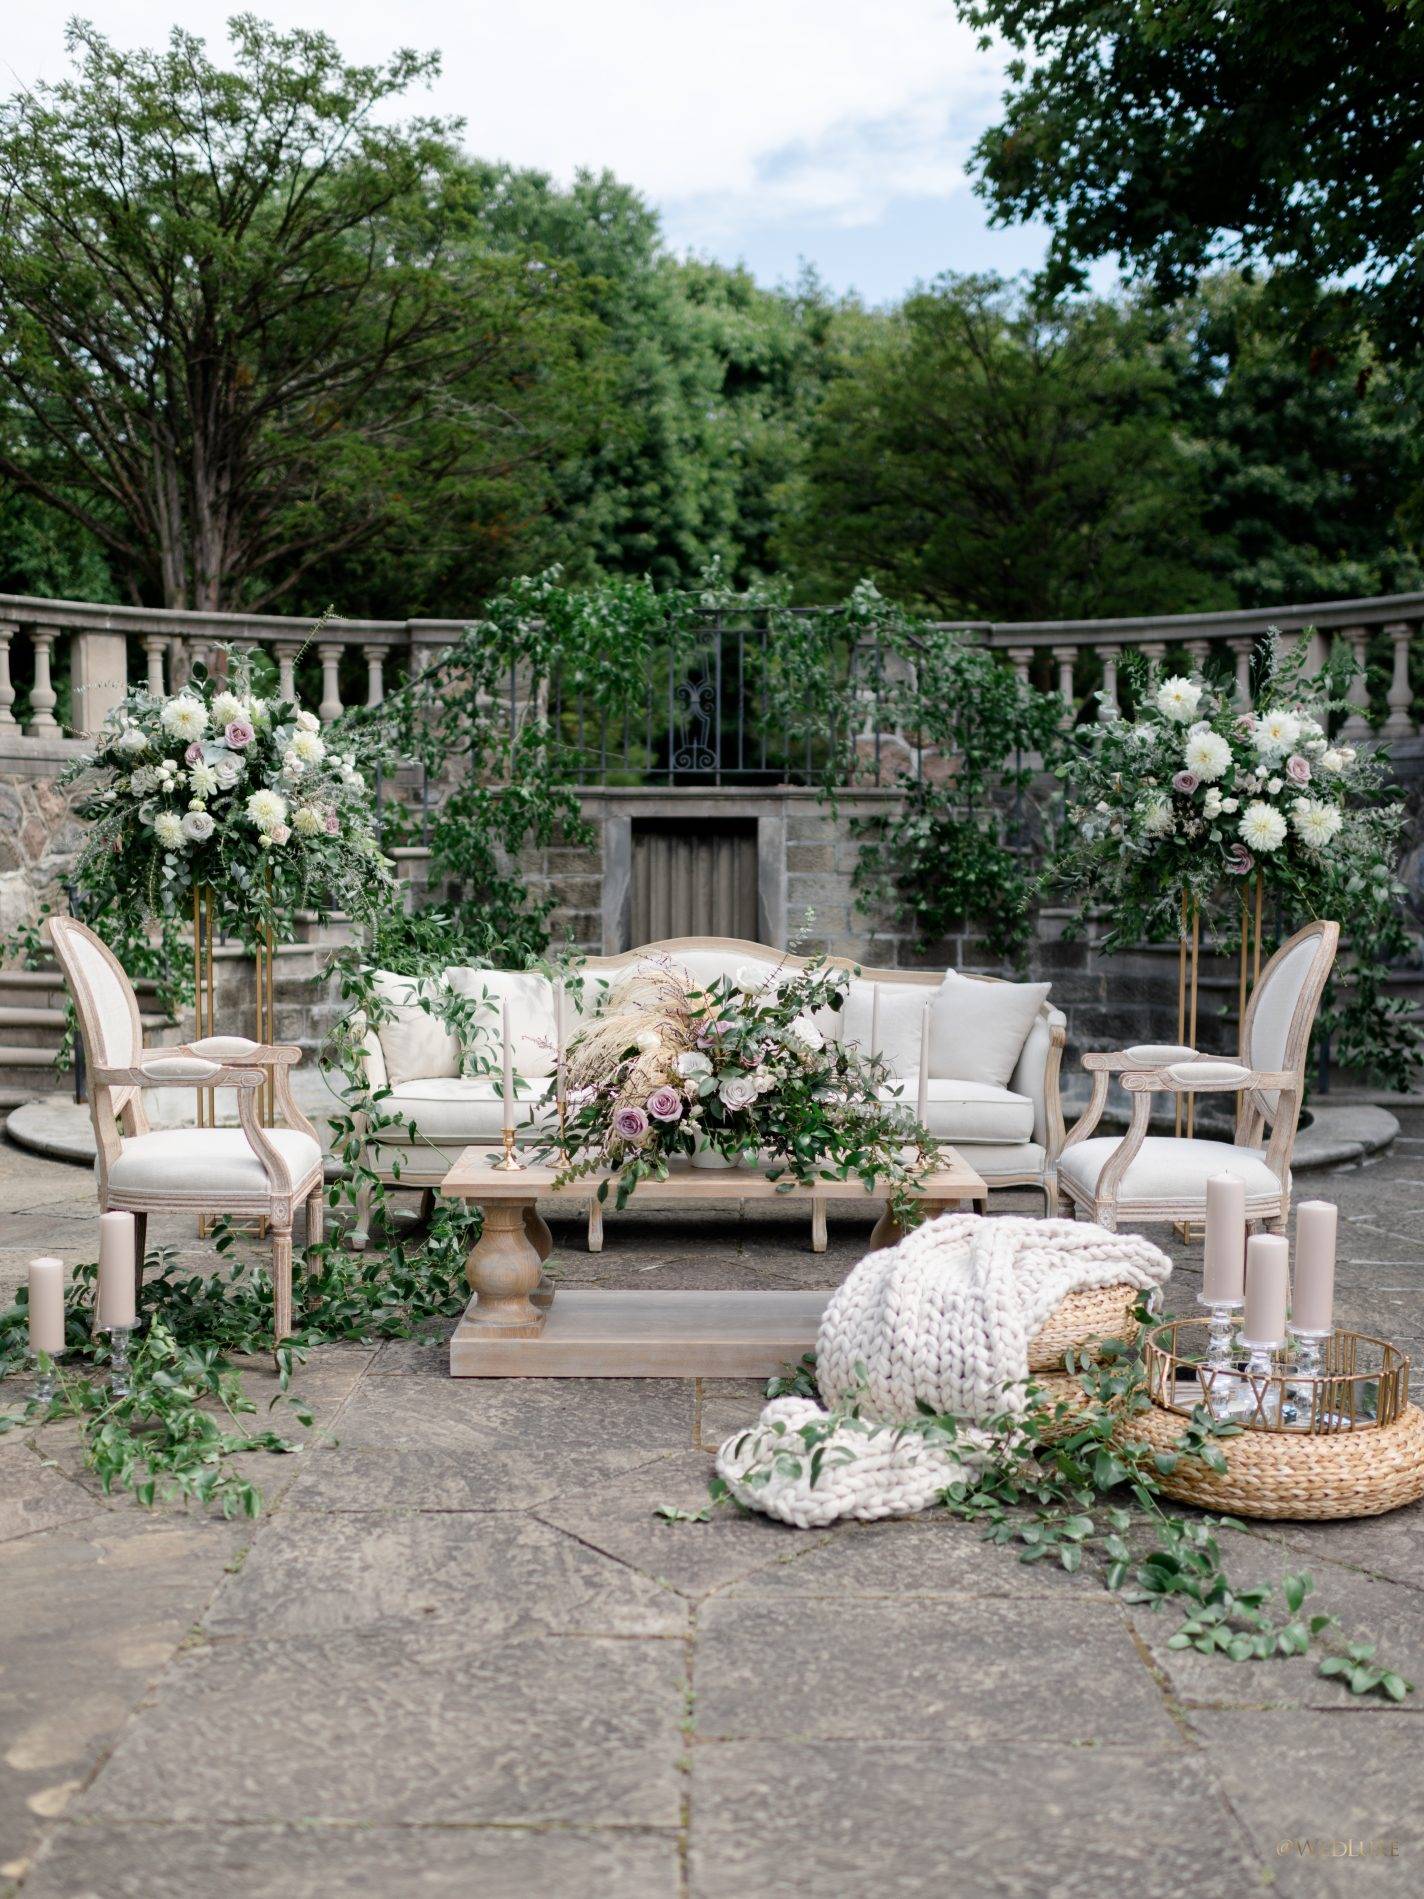 Decoración de boda al aire libre: zona de asientos decorada con flores en boda al aire libre, Pinterest.